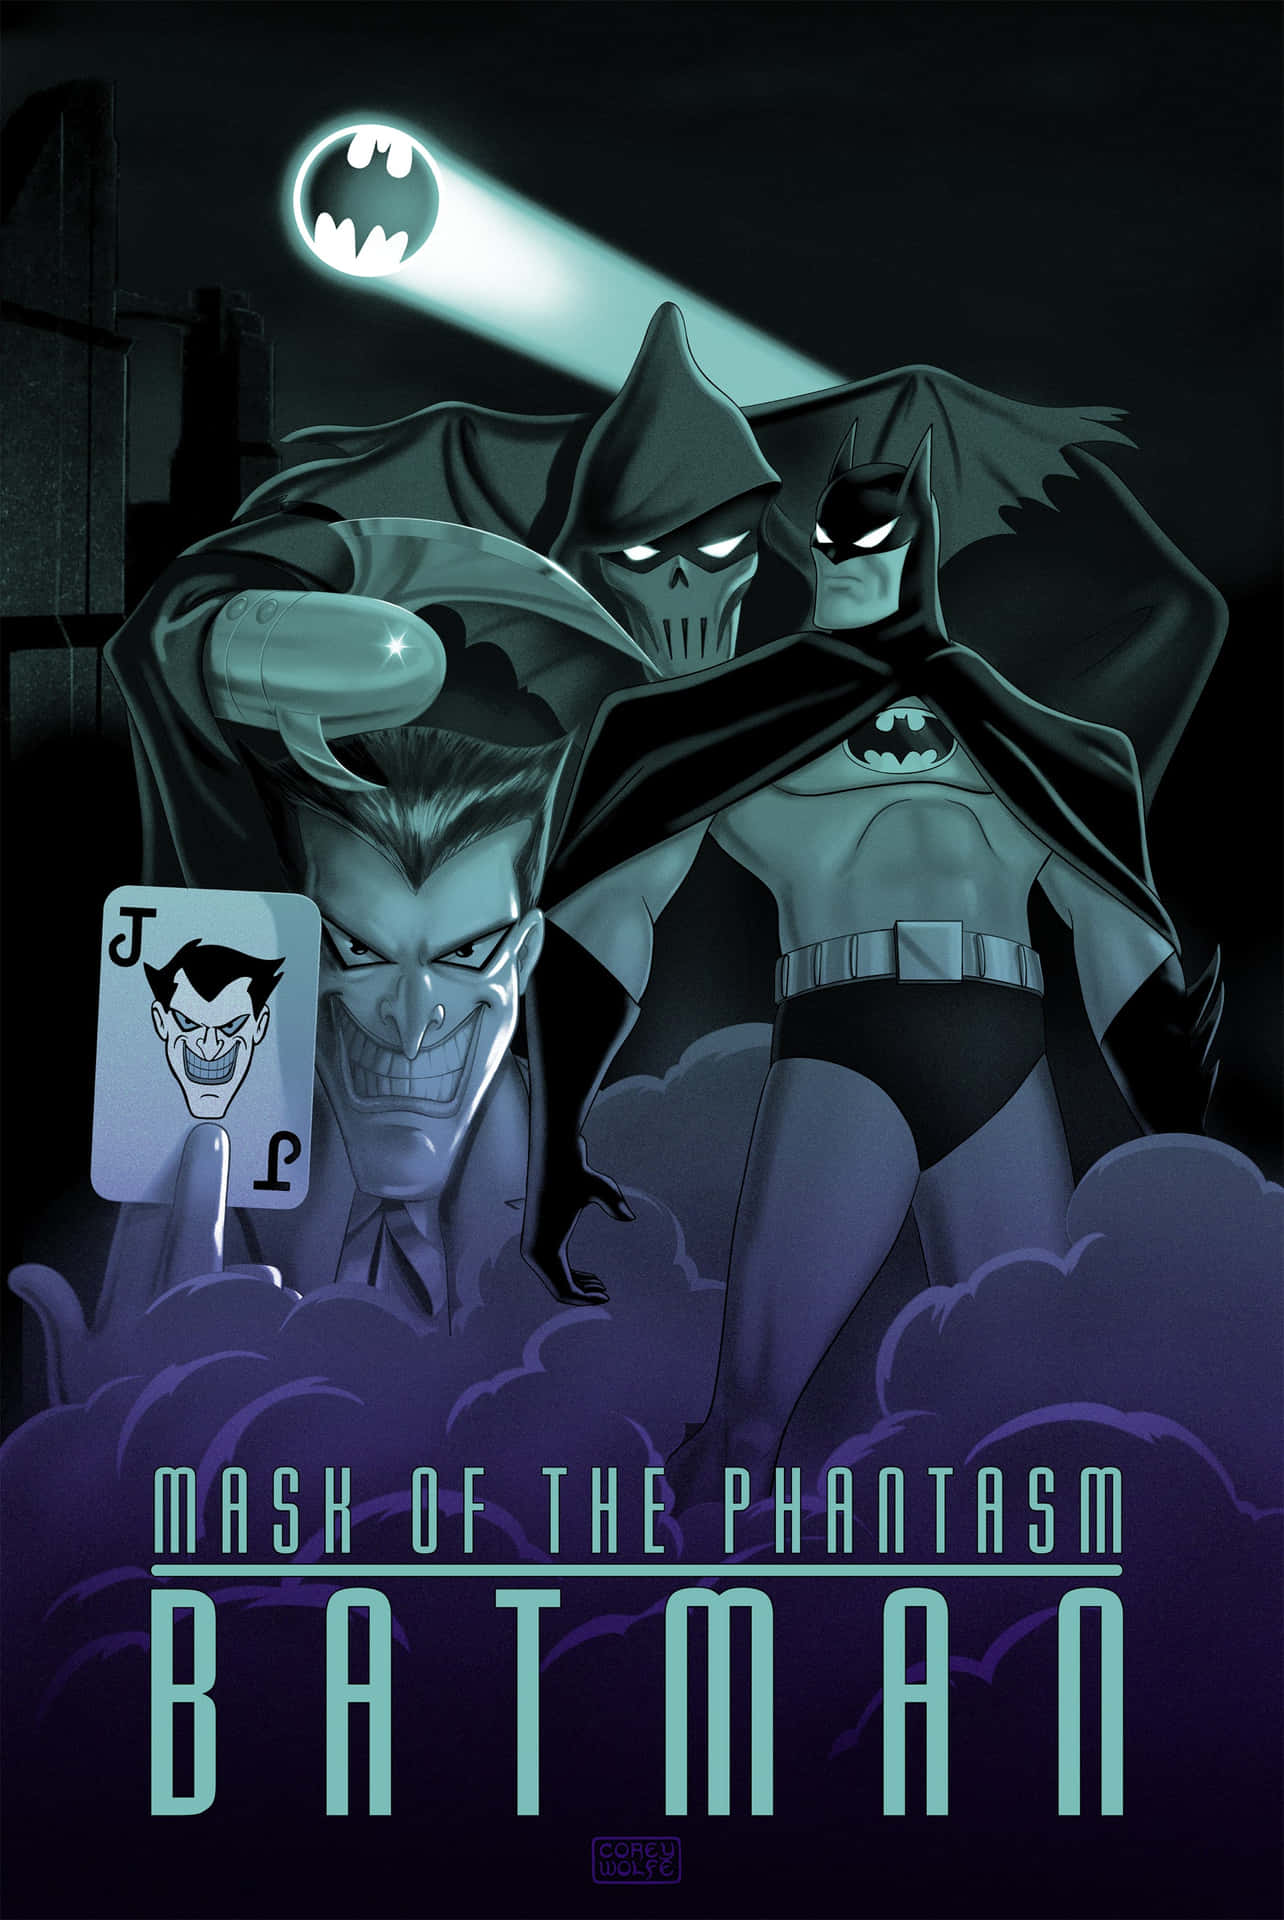 Batman faces the enigmatic Phantasm in the animated classic "Batman: Mask of the Phantasm". Wallpaper